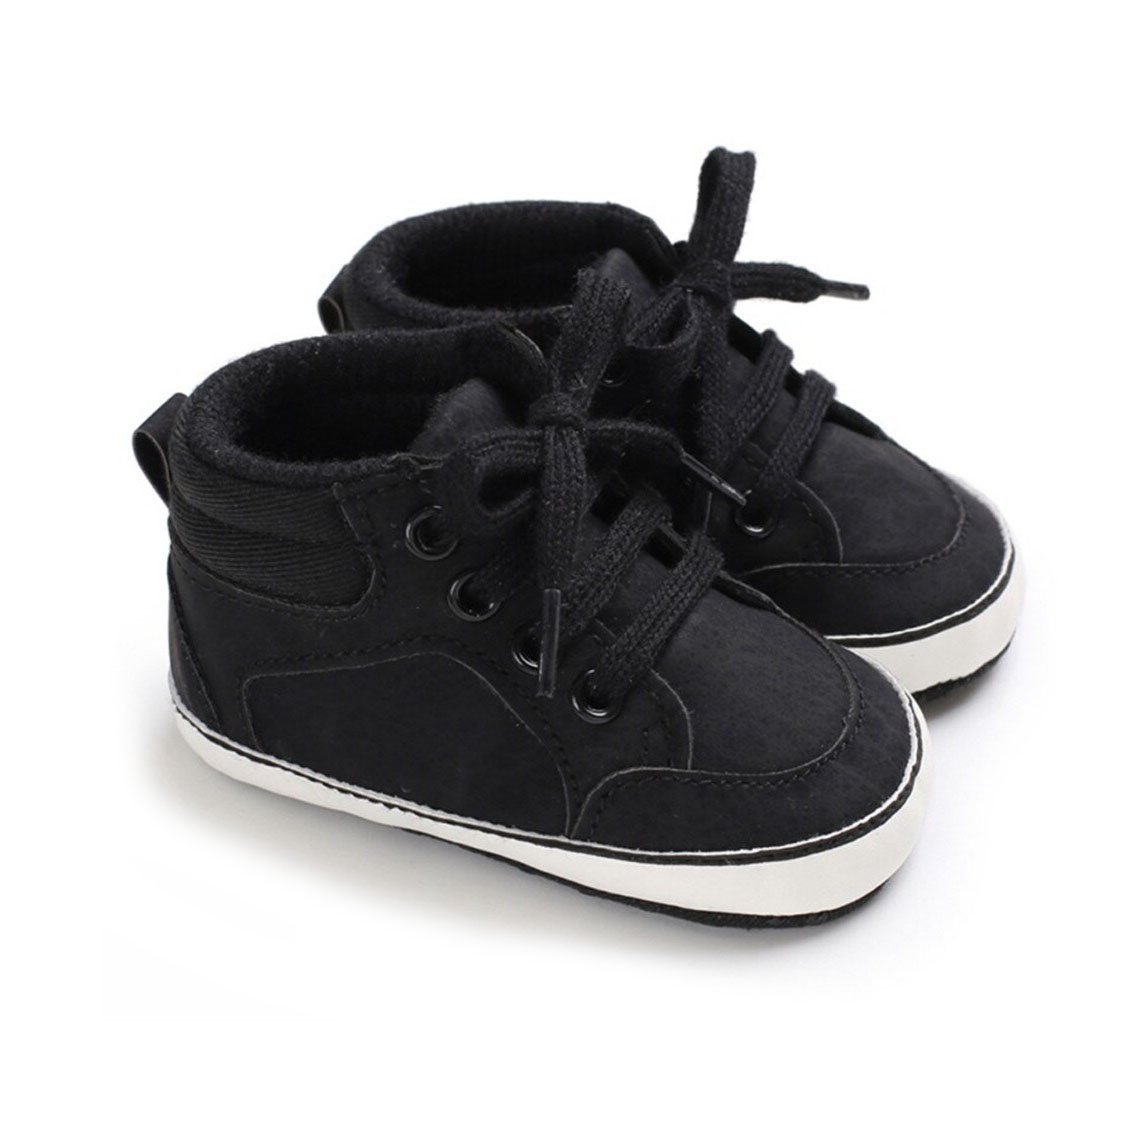 Black Anti Slip Leather Baby Shoes